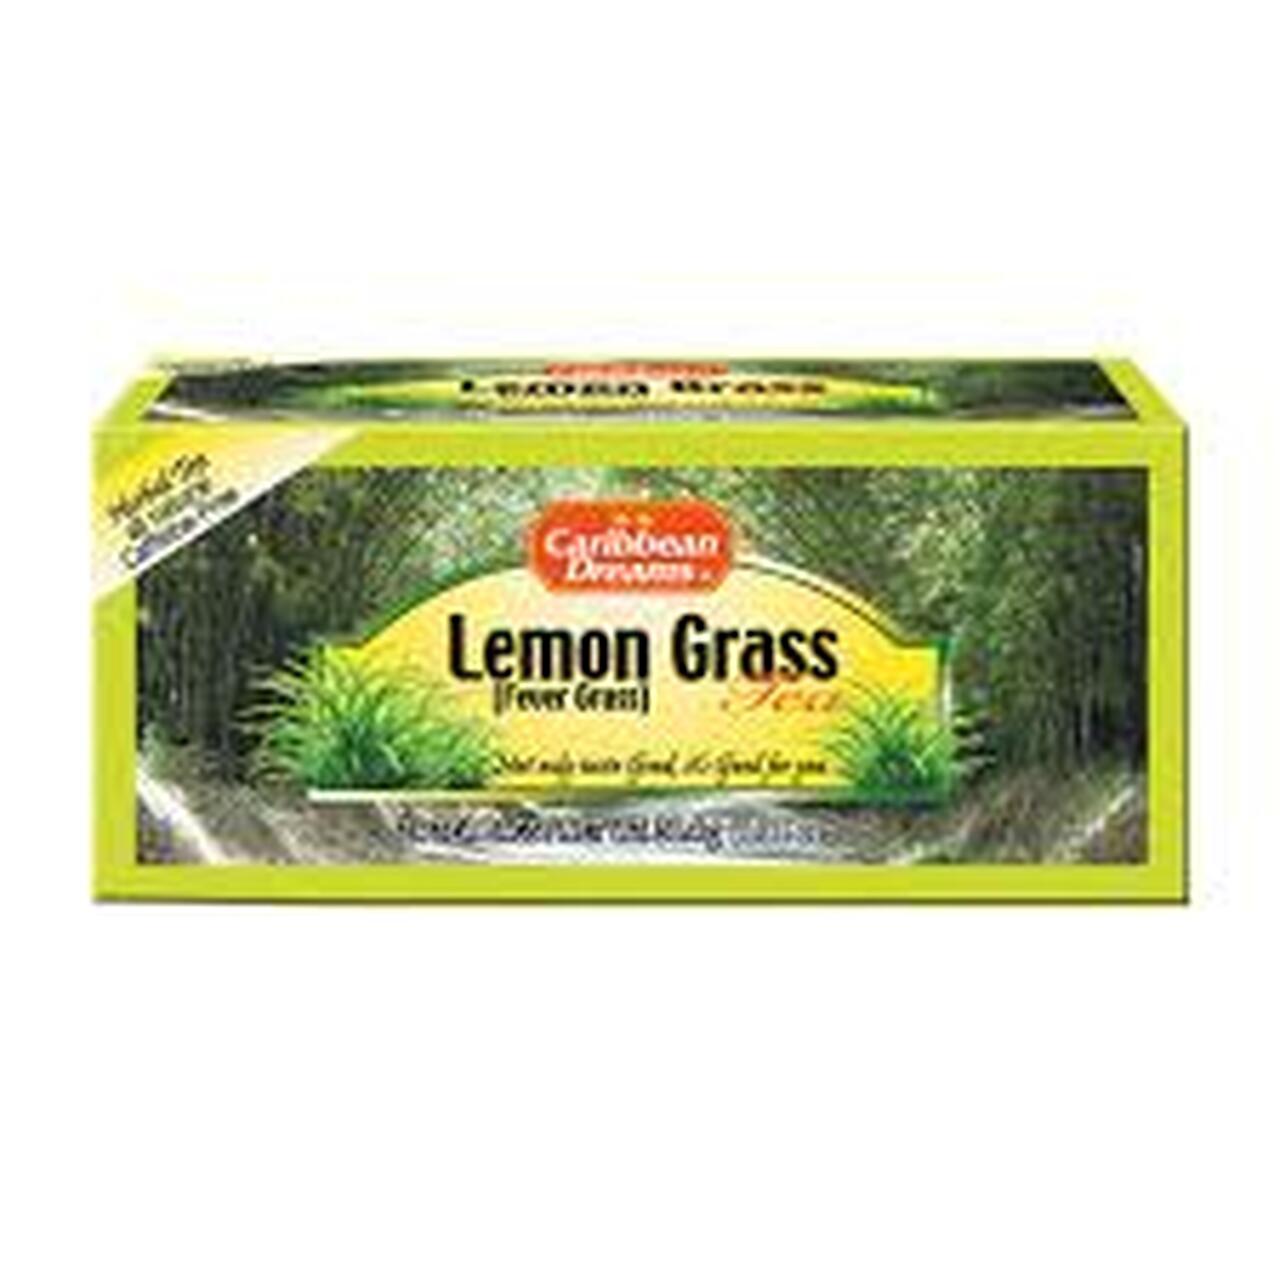 Caribbean Dreams Lemon Grass Tea Bag 24s